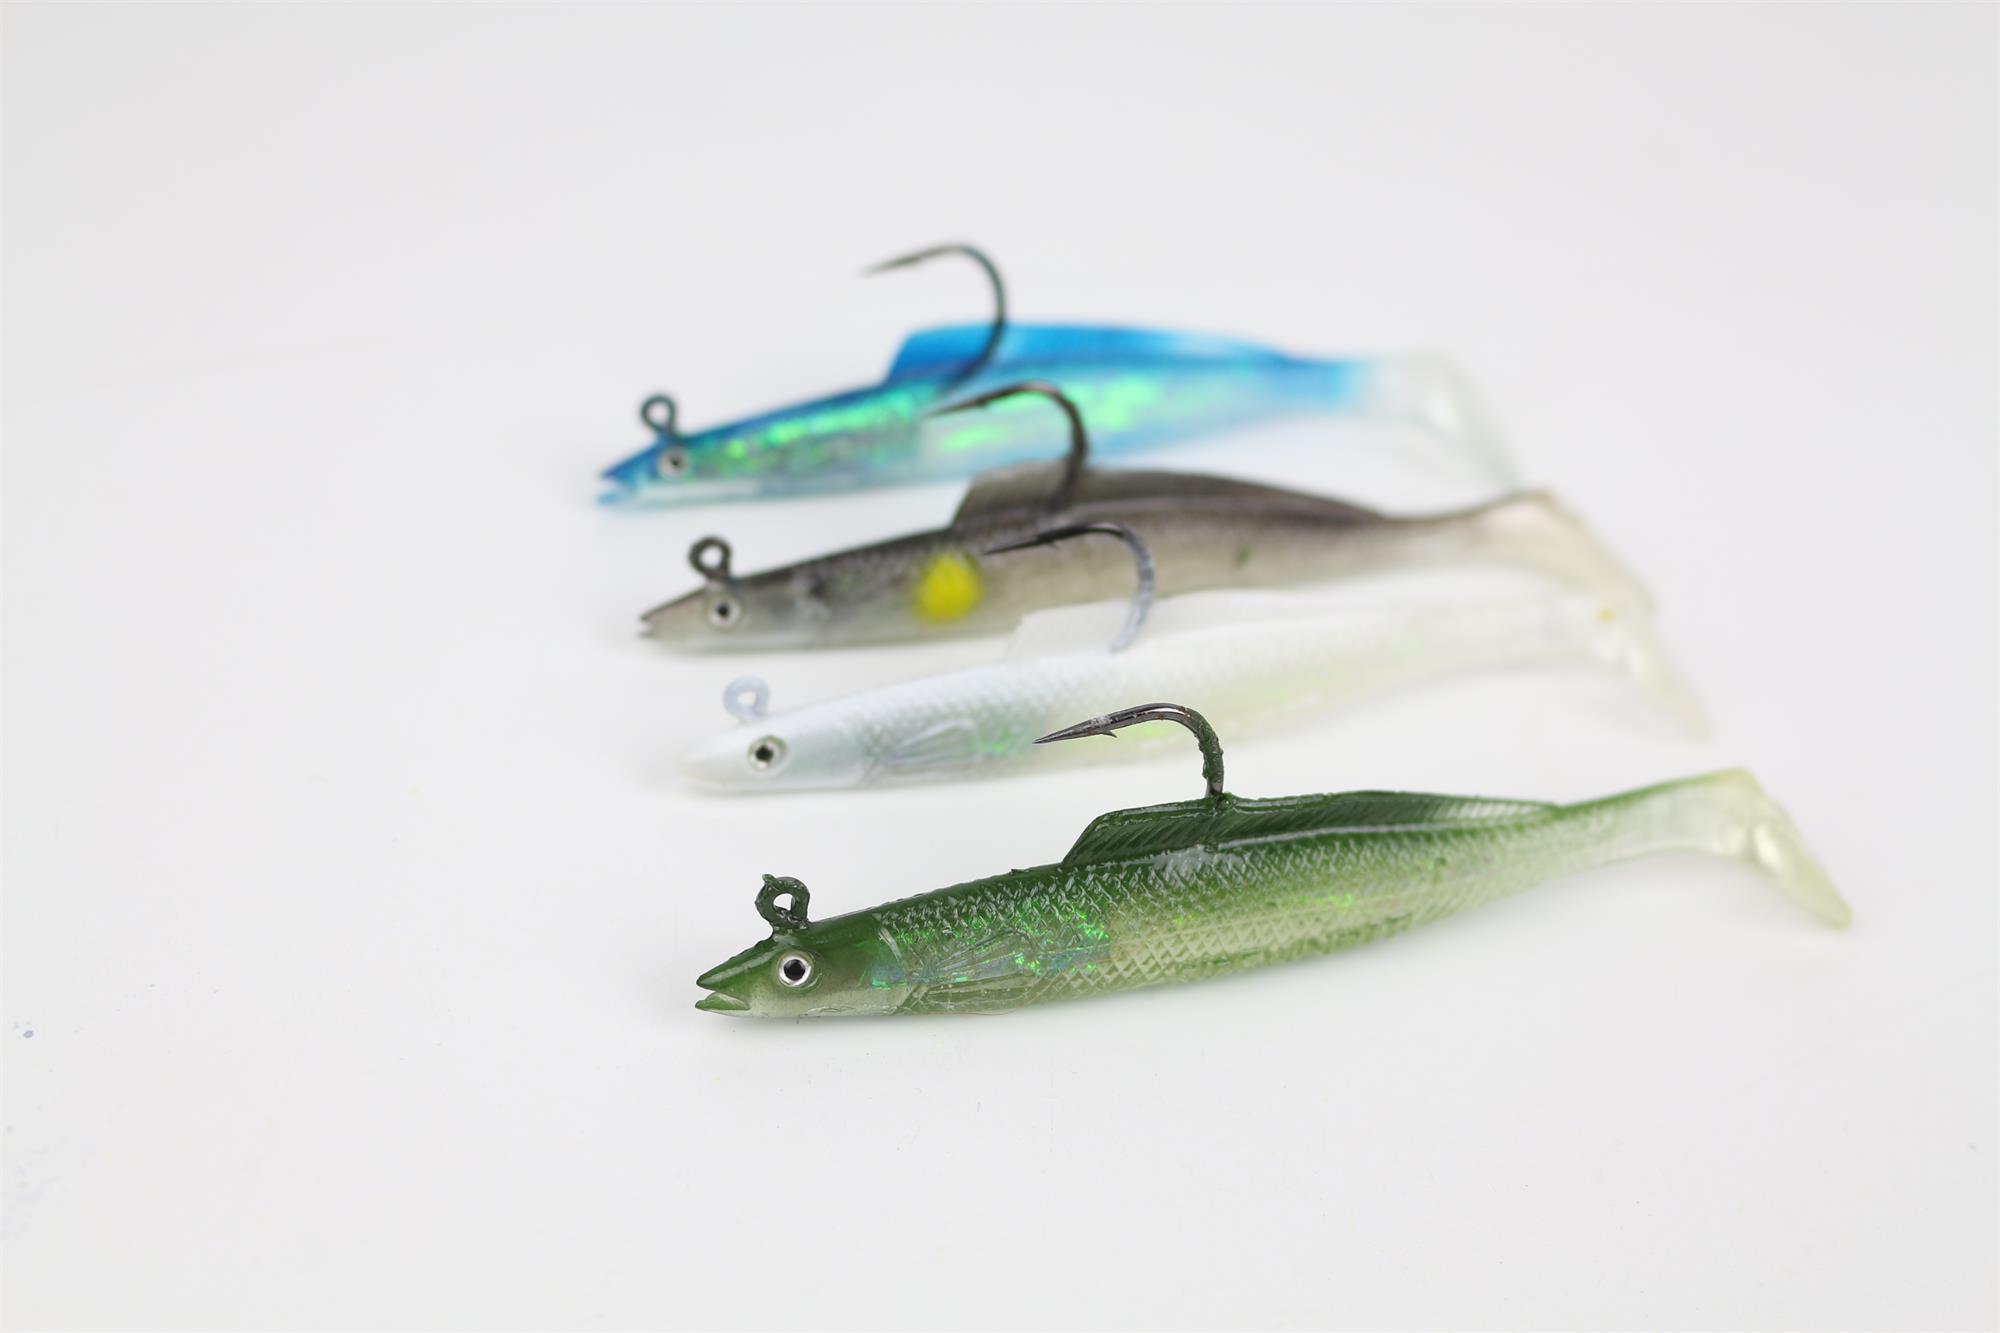 Okuma slow-jig and softbait options - The Fishing Website